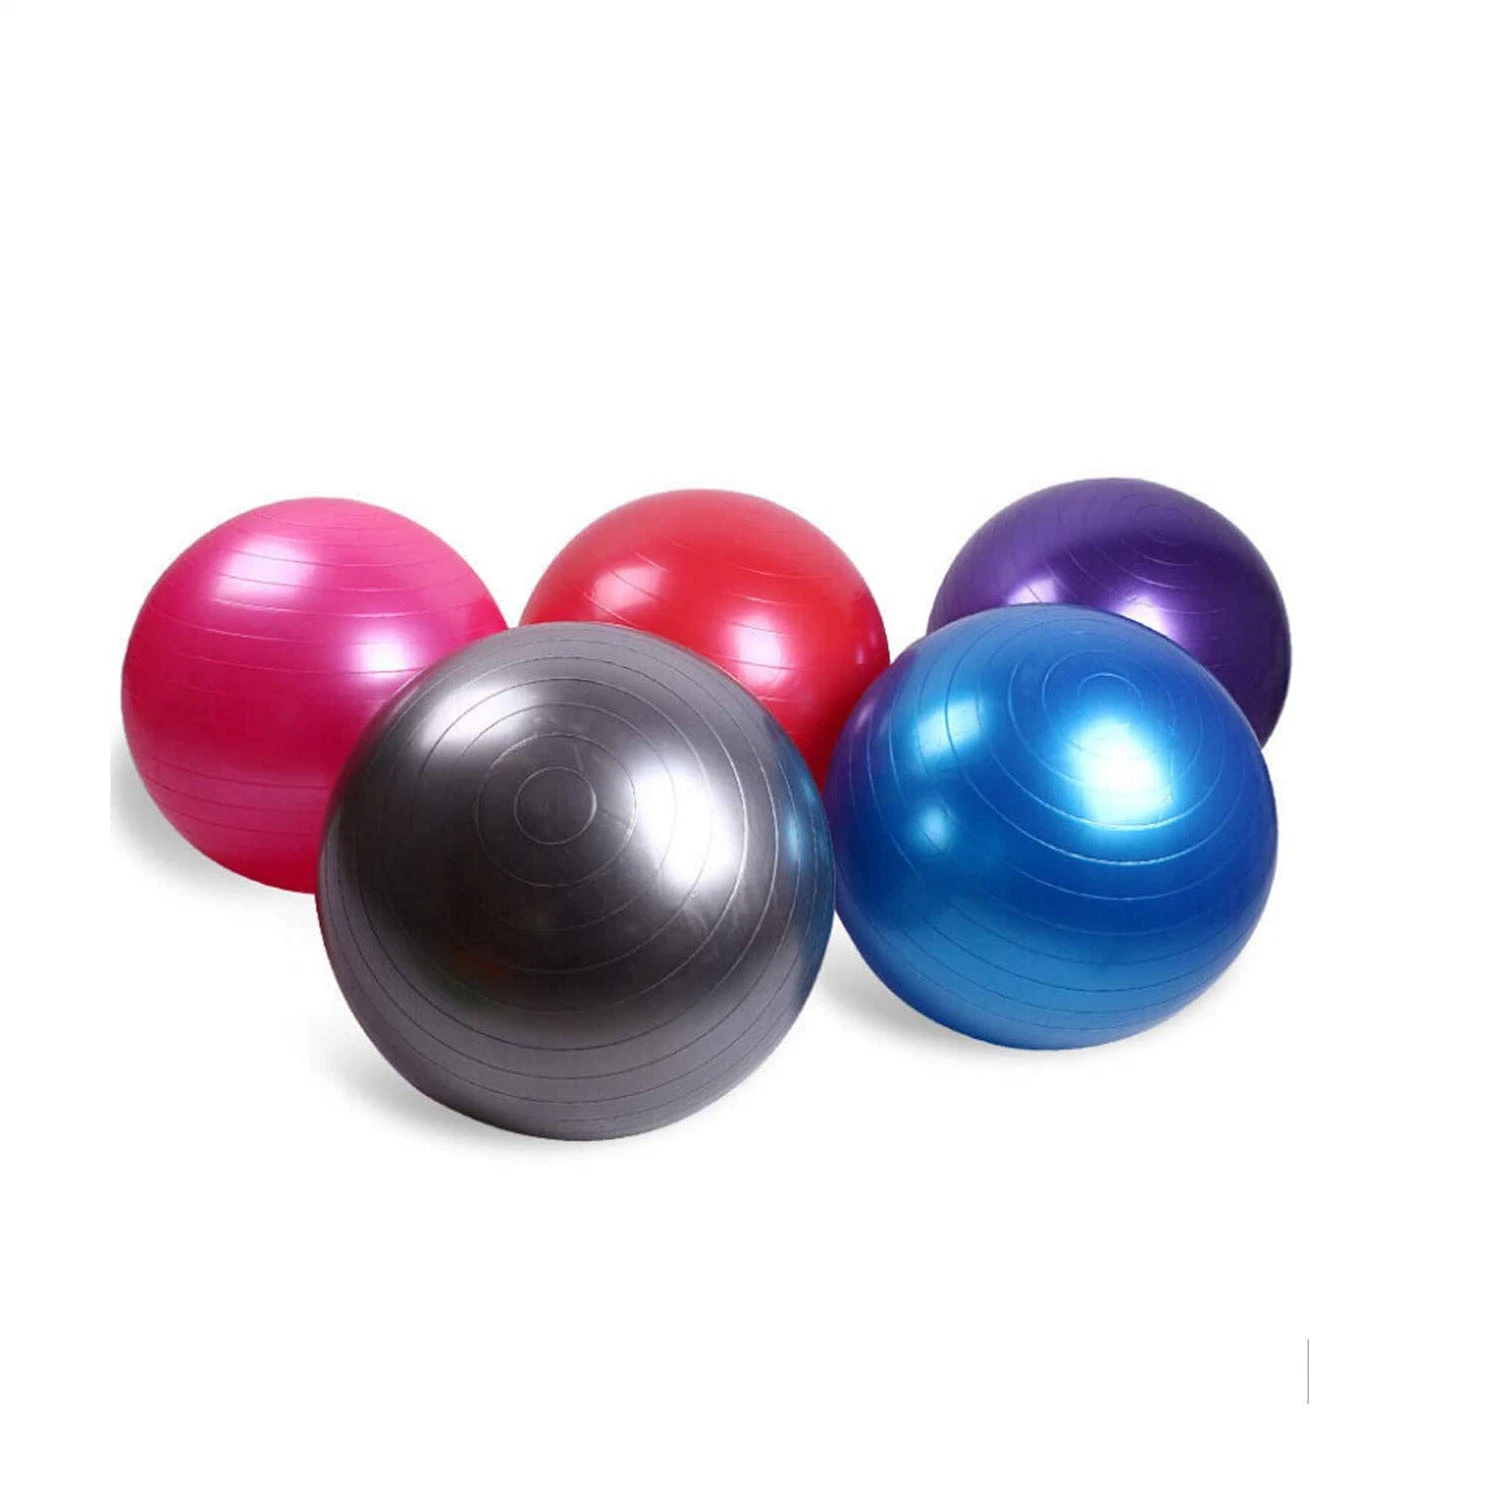 Vente en gros PVC coloré Yoga ball Eco friendly Yoga ball pour Gym Fitness exercice Balance Yoga ball